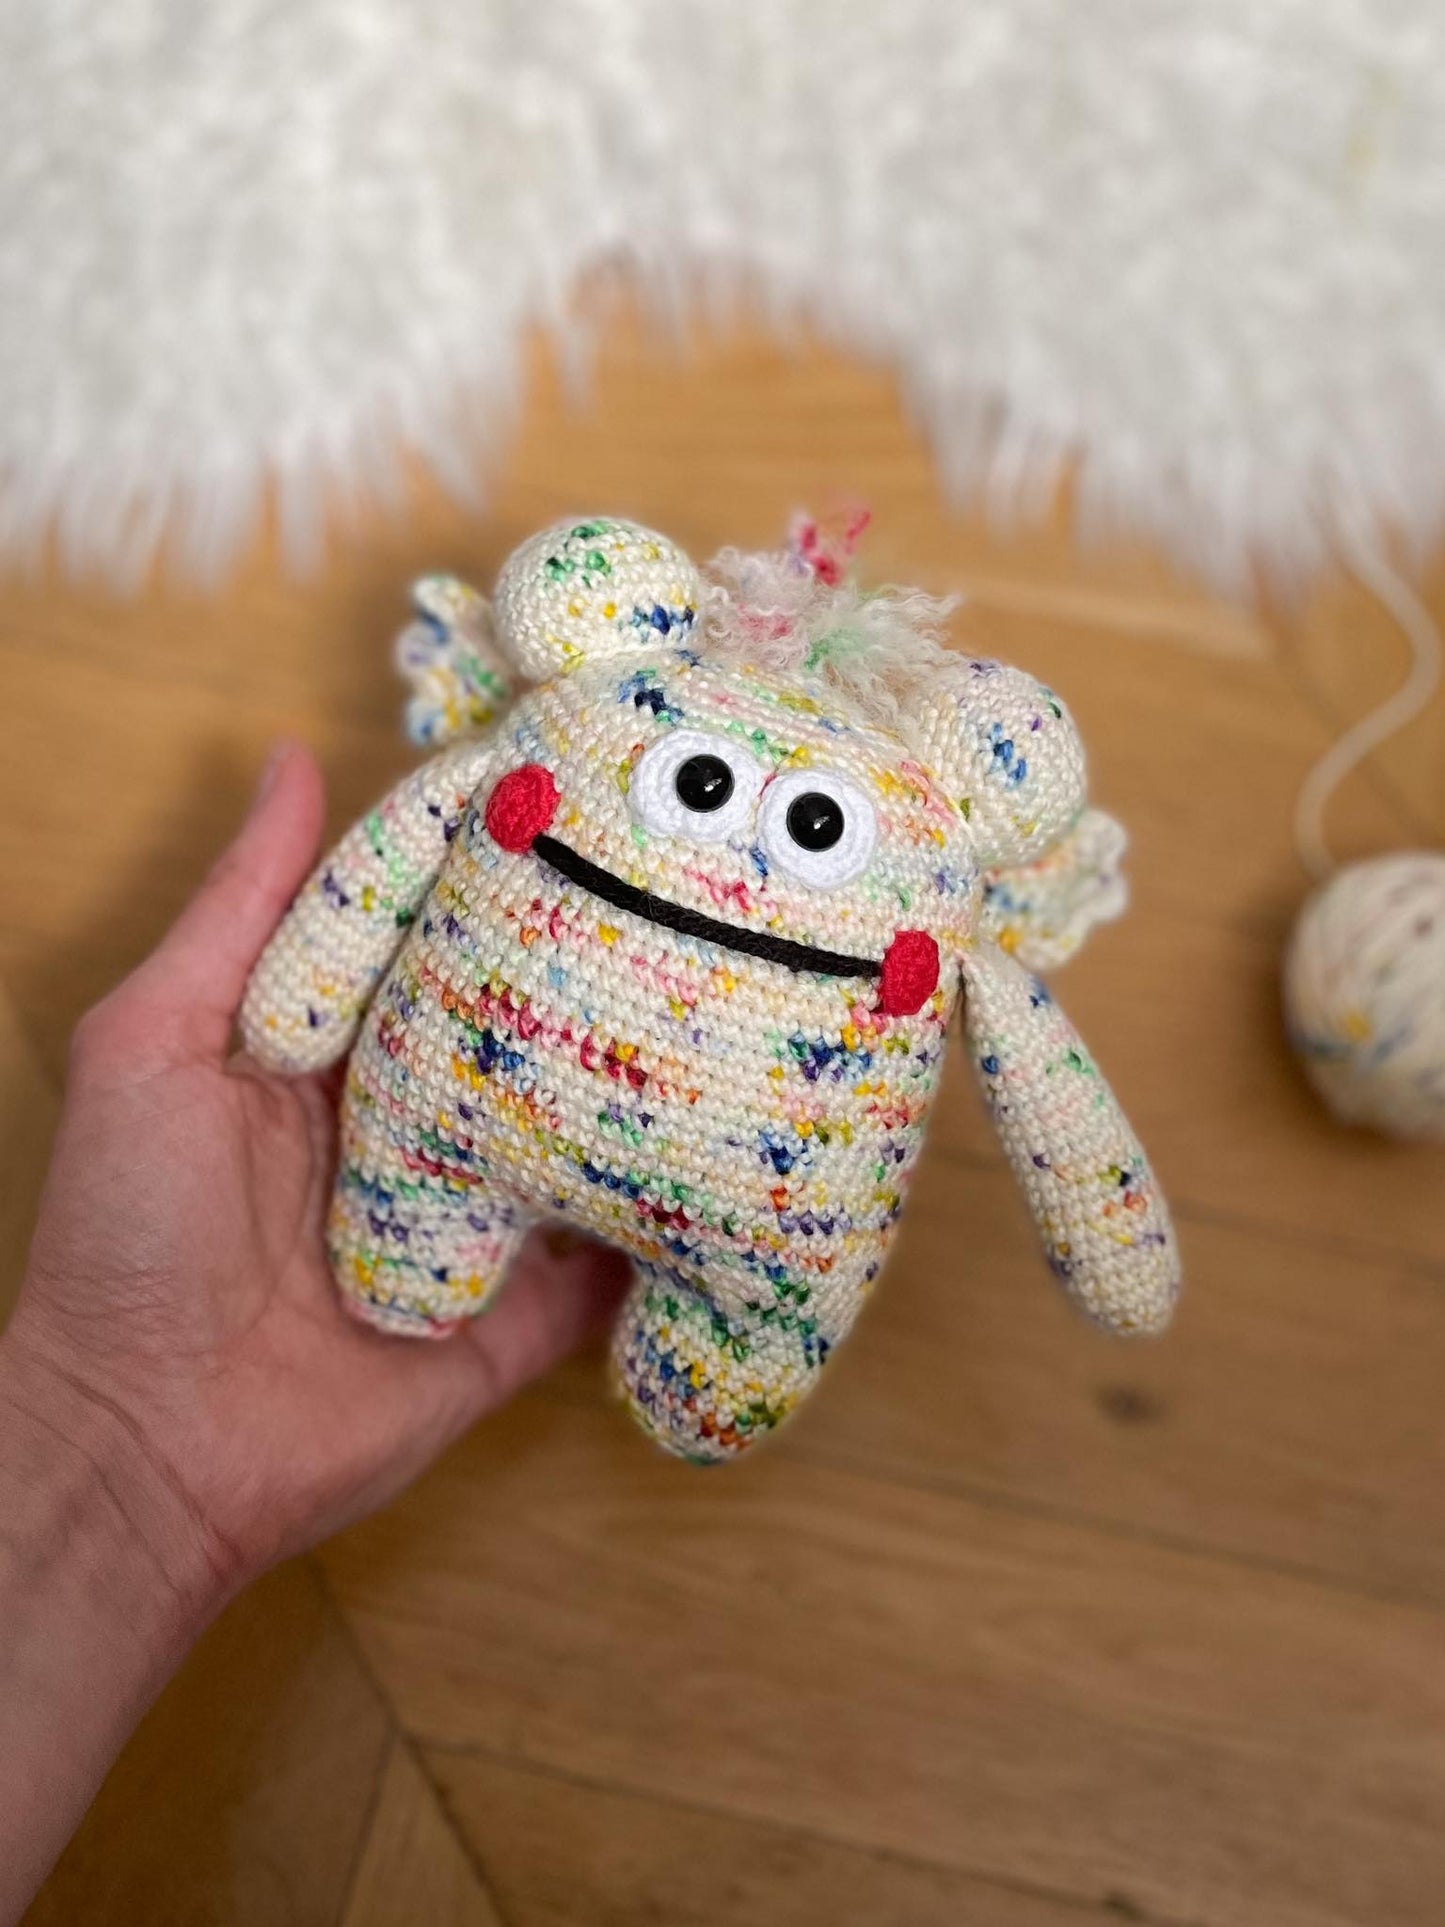 Colorina, the Monster Amigurumi Crochet Pattern